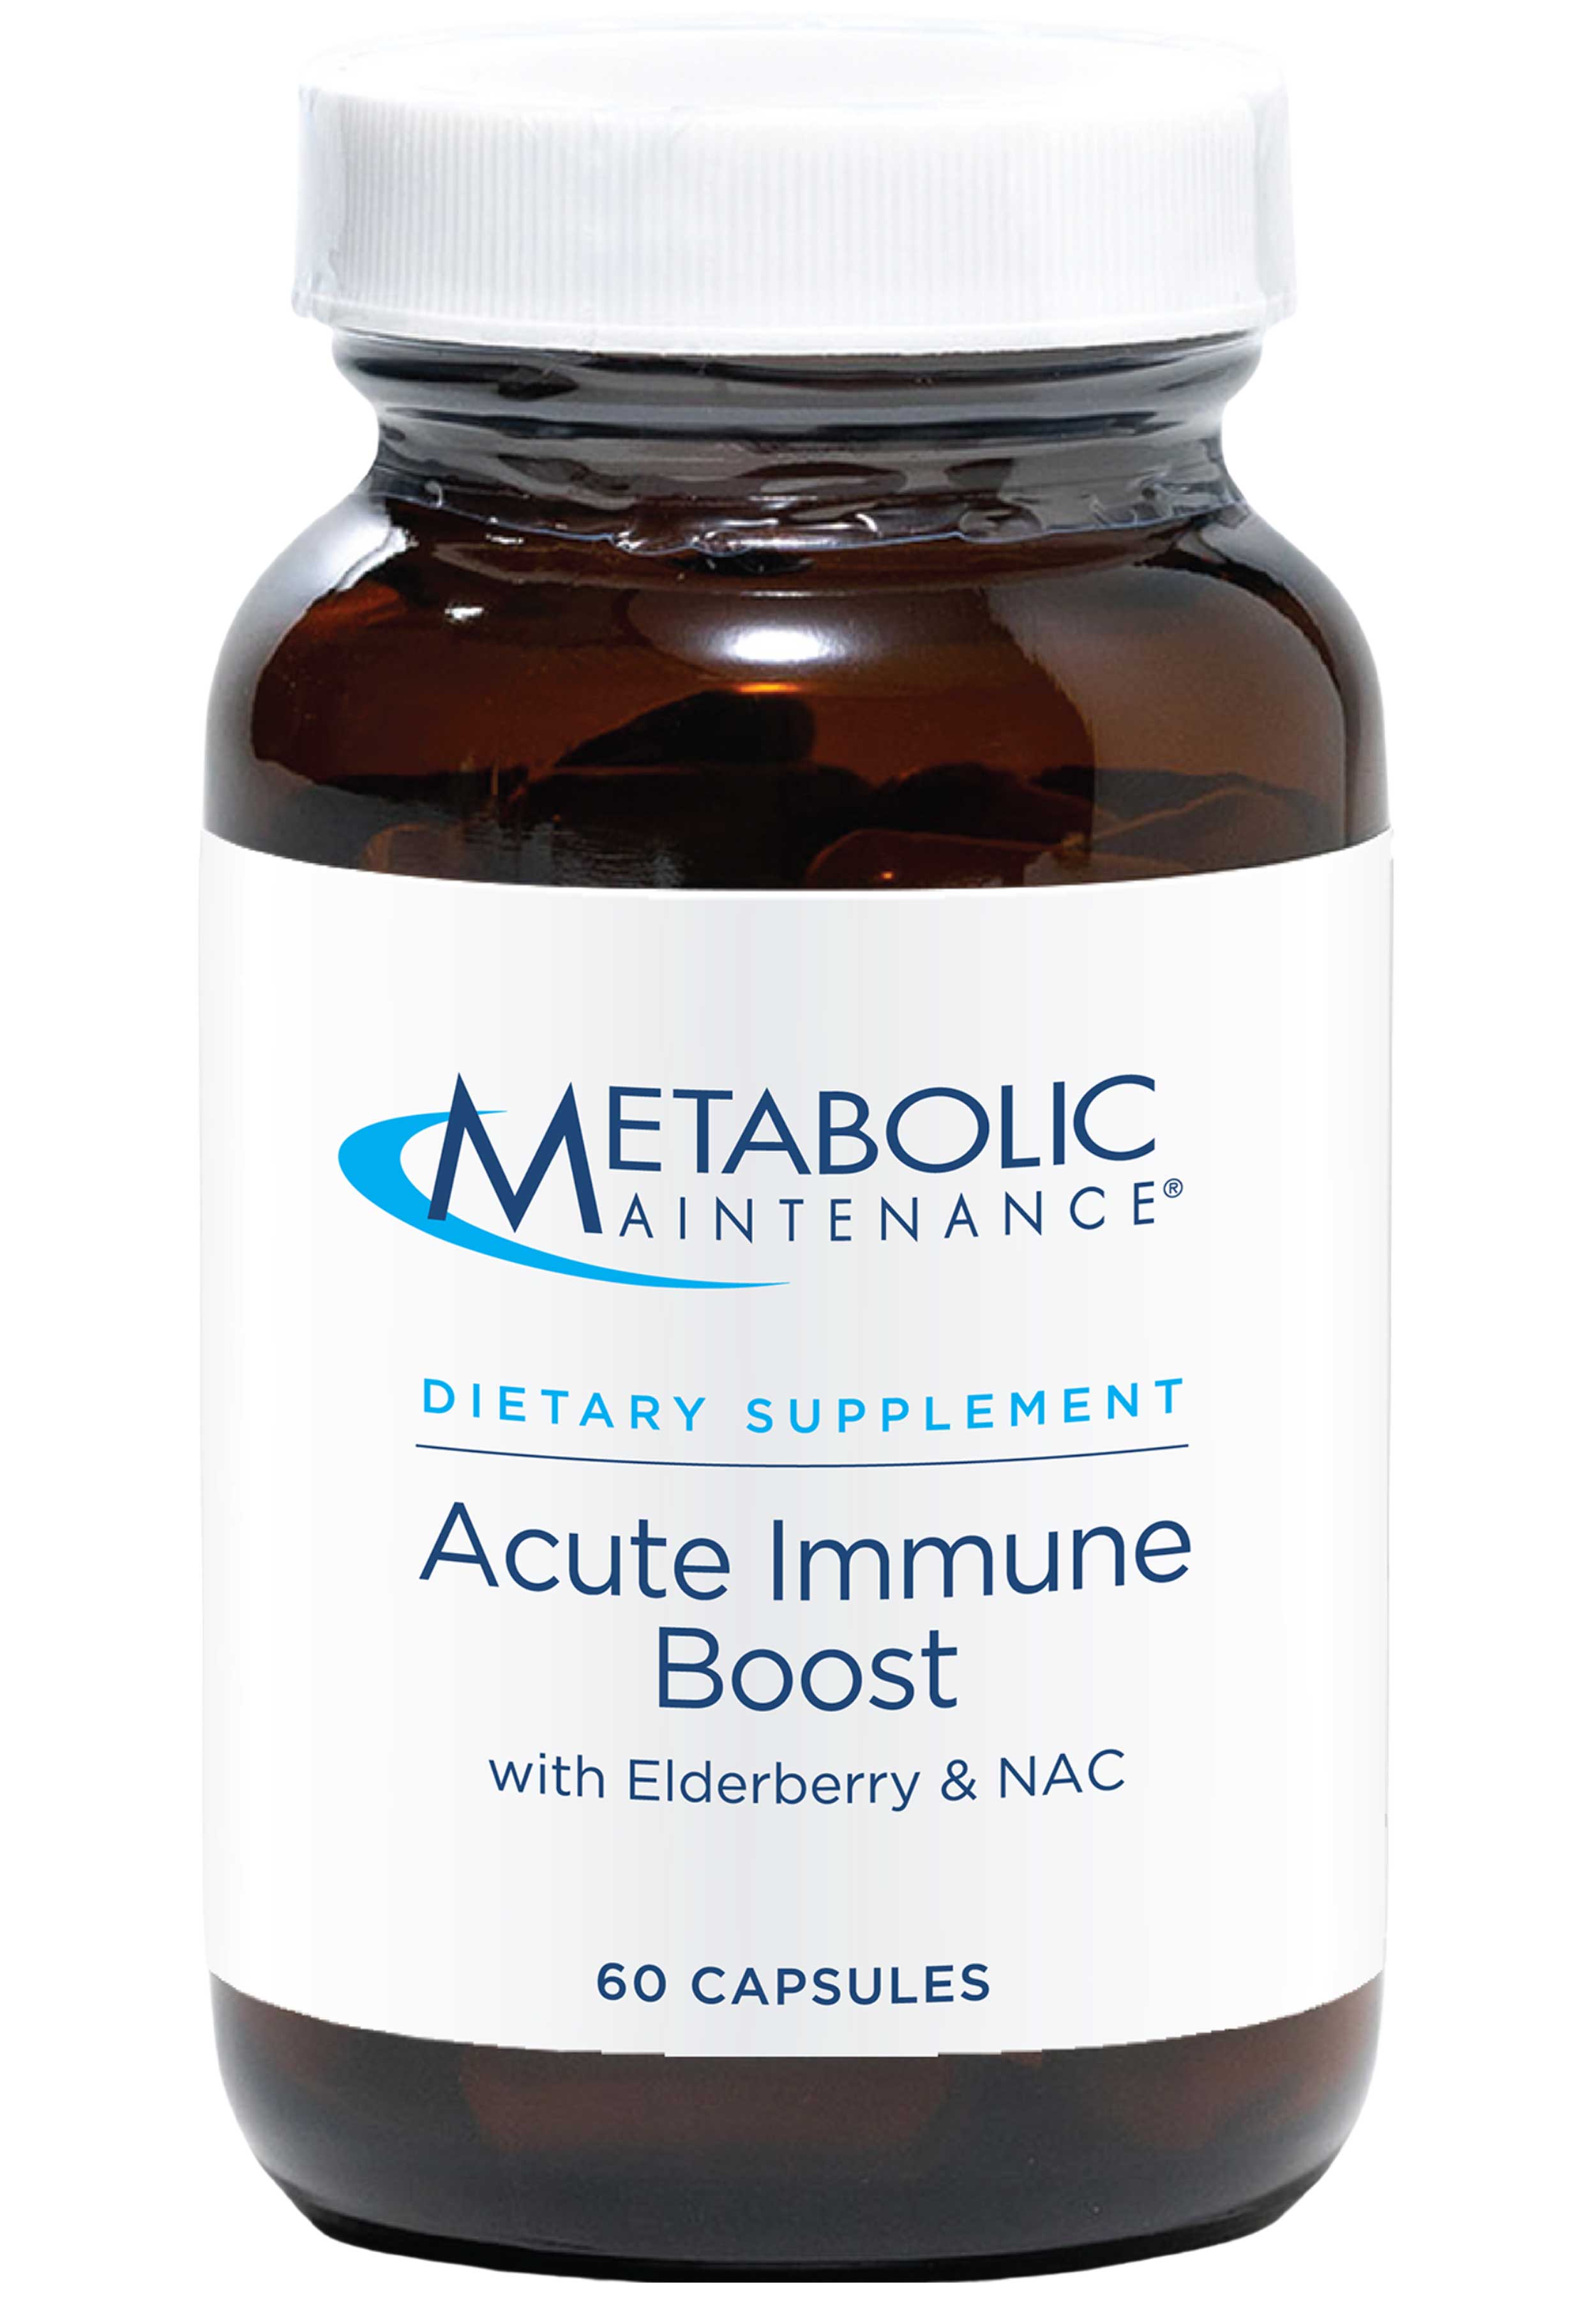 Metabolic Maintenance Acute Immune Boost